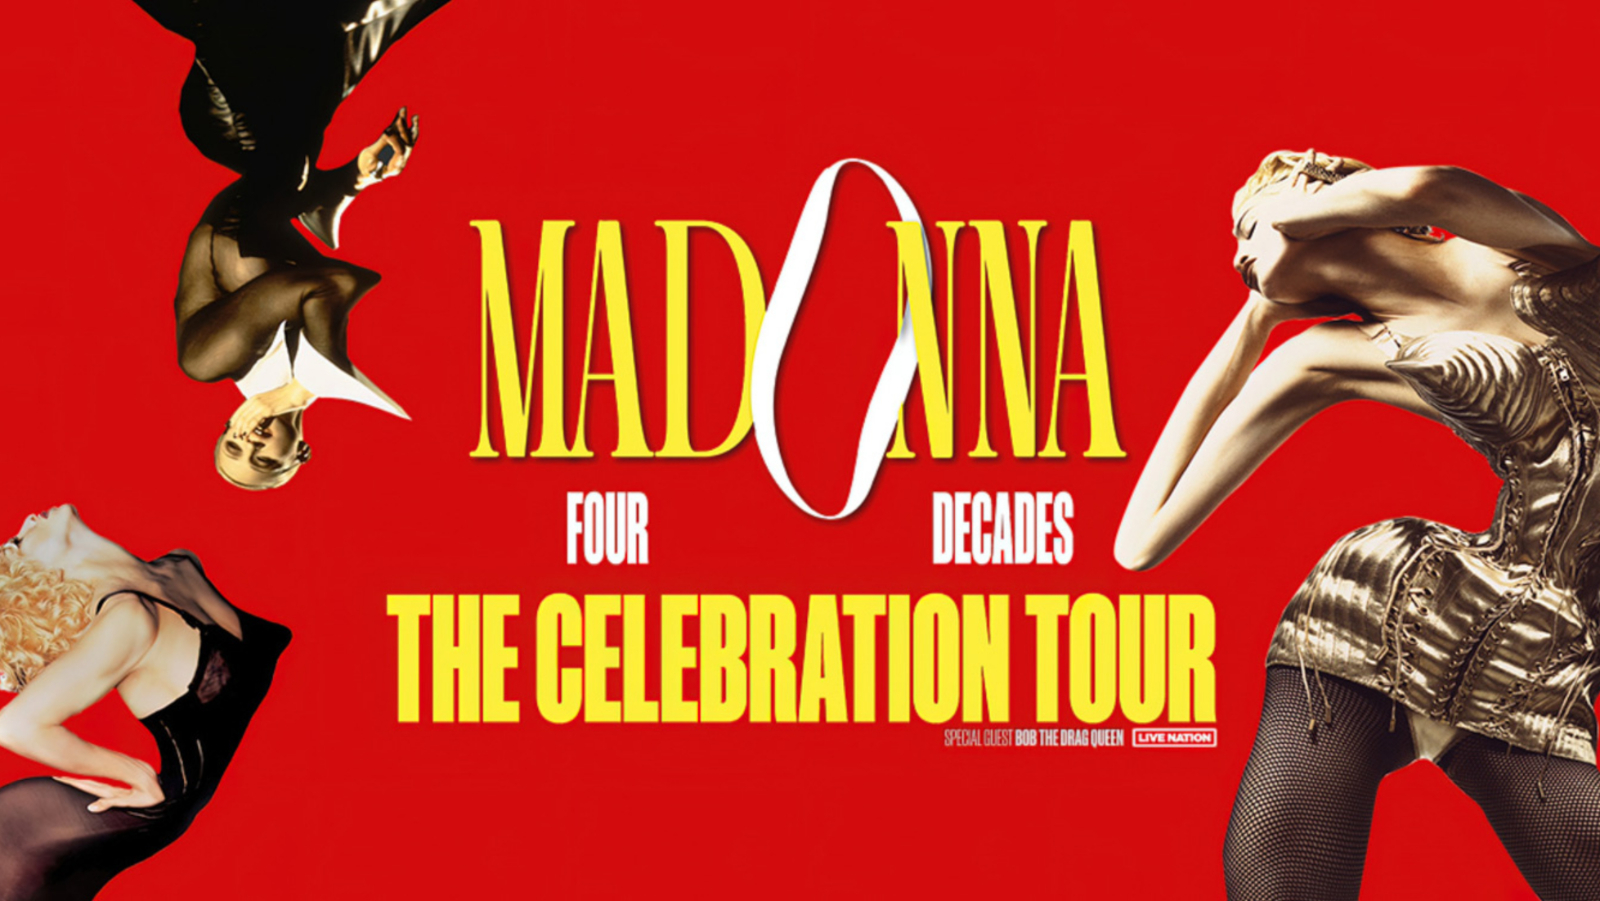 Madonna, The Celebration Tour